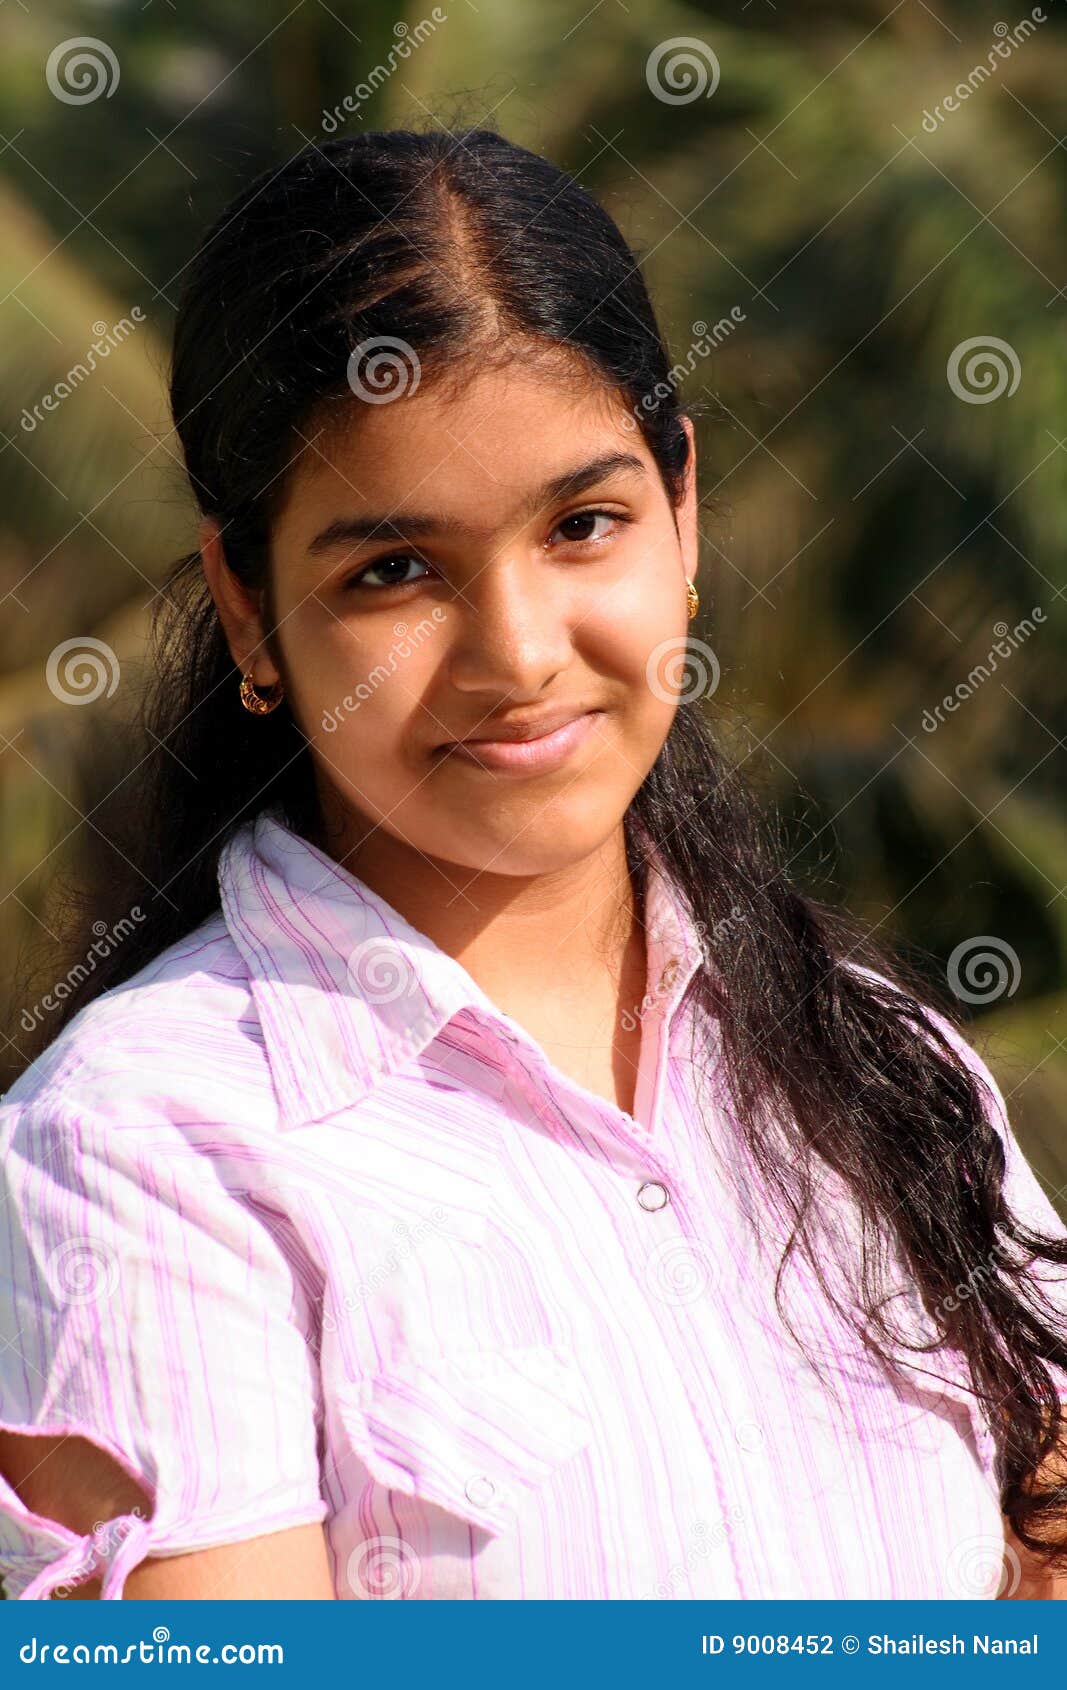 damodar tripathi add indian college girls pics photo